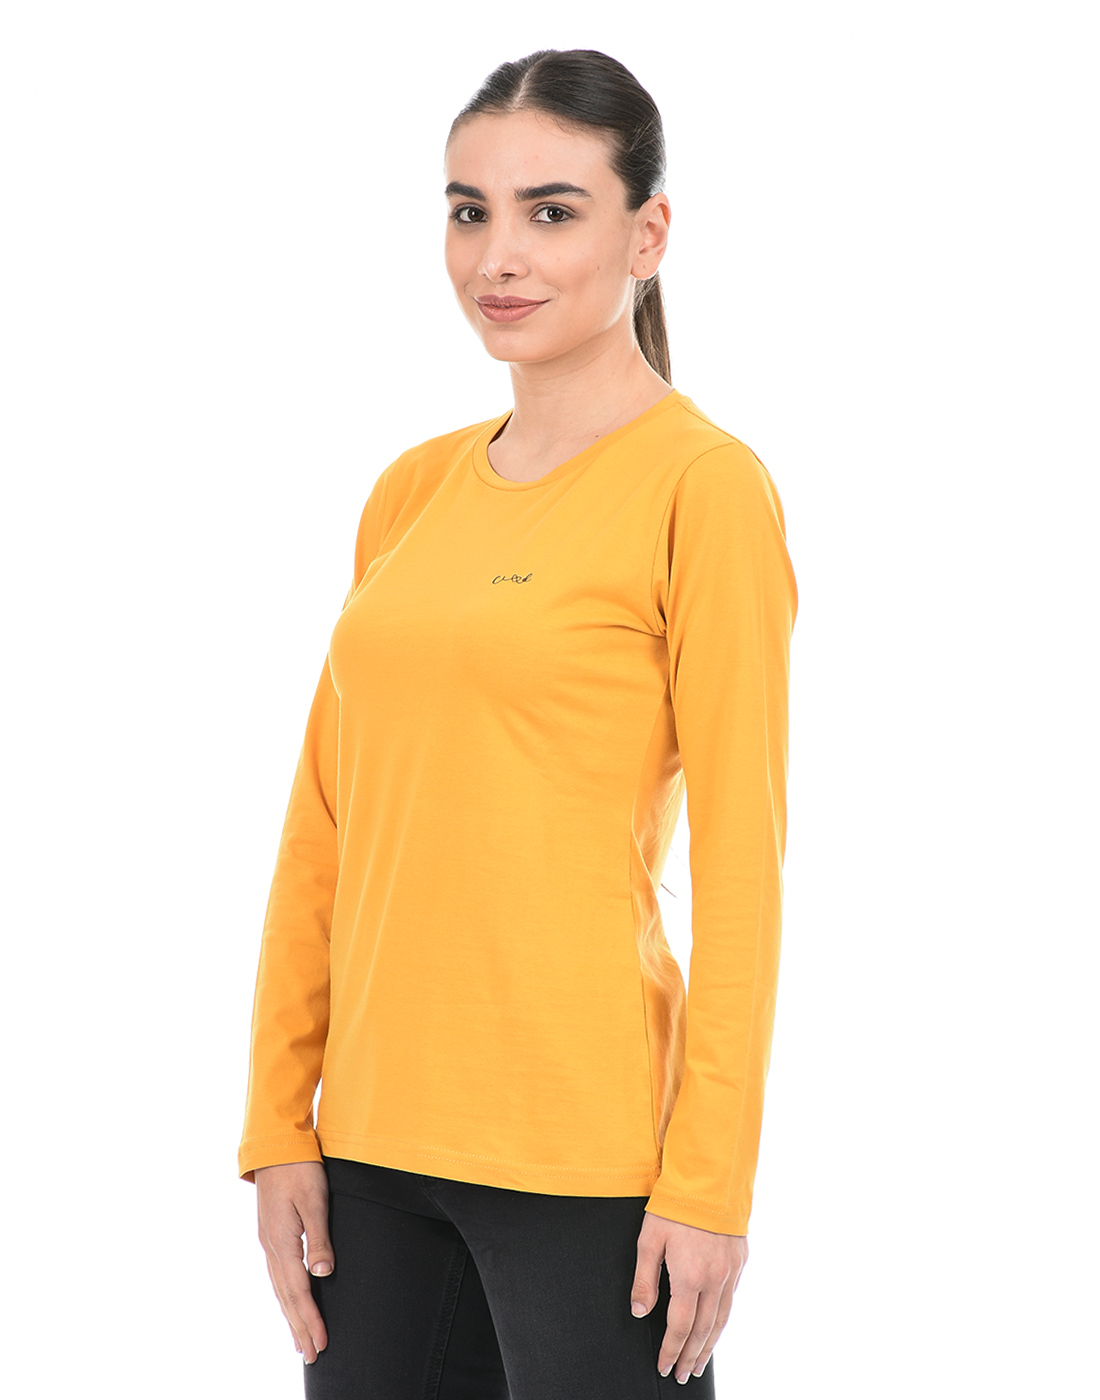 Cloak & Decker by Monte Carlo Women Solid Yellow T-Shirt